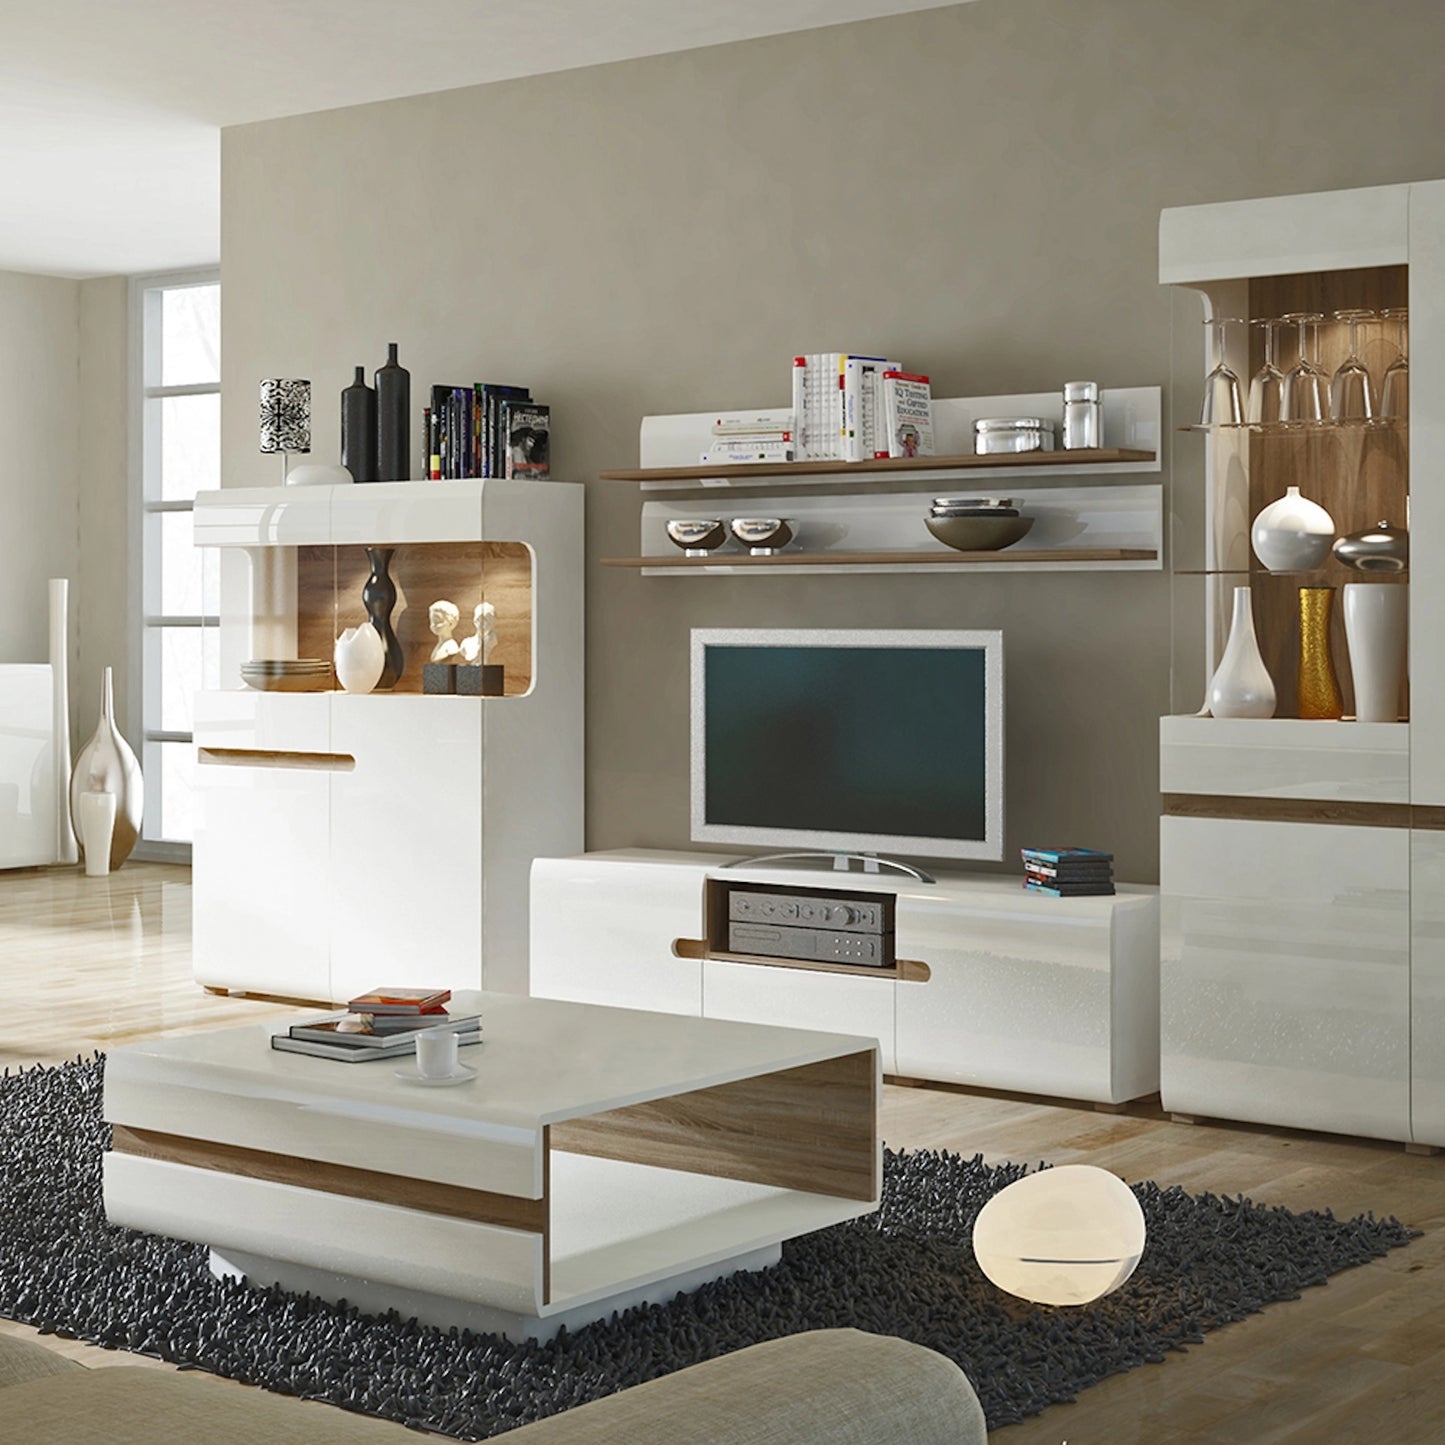 Furniture To Go Chelsea Wall Shelf in White with Oak Trim